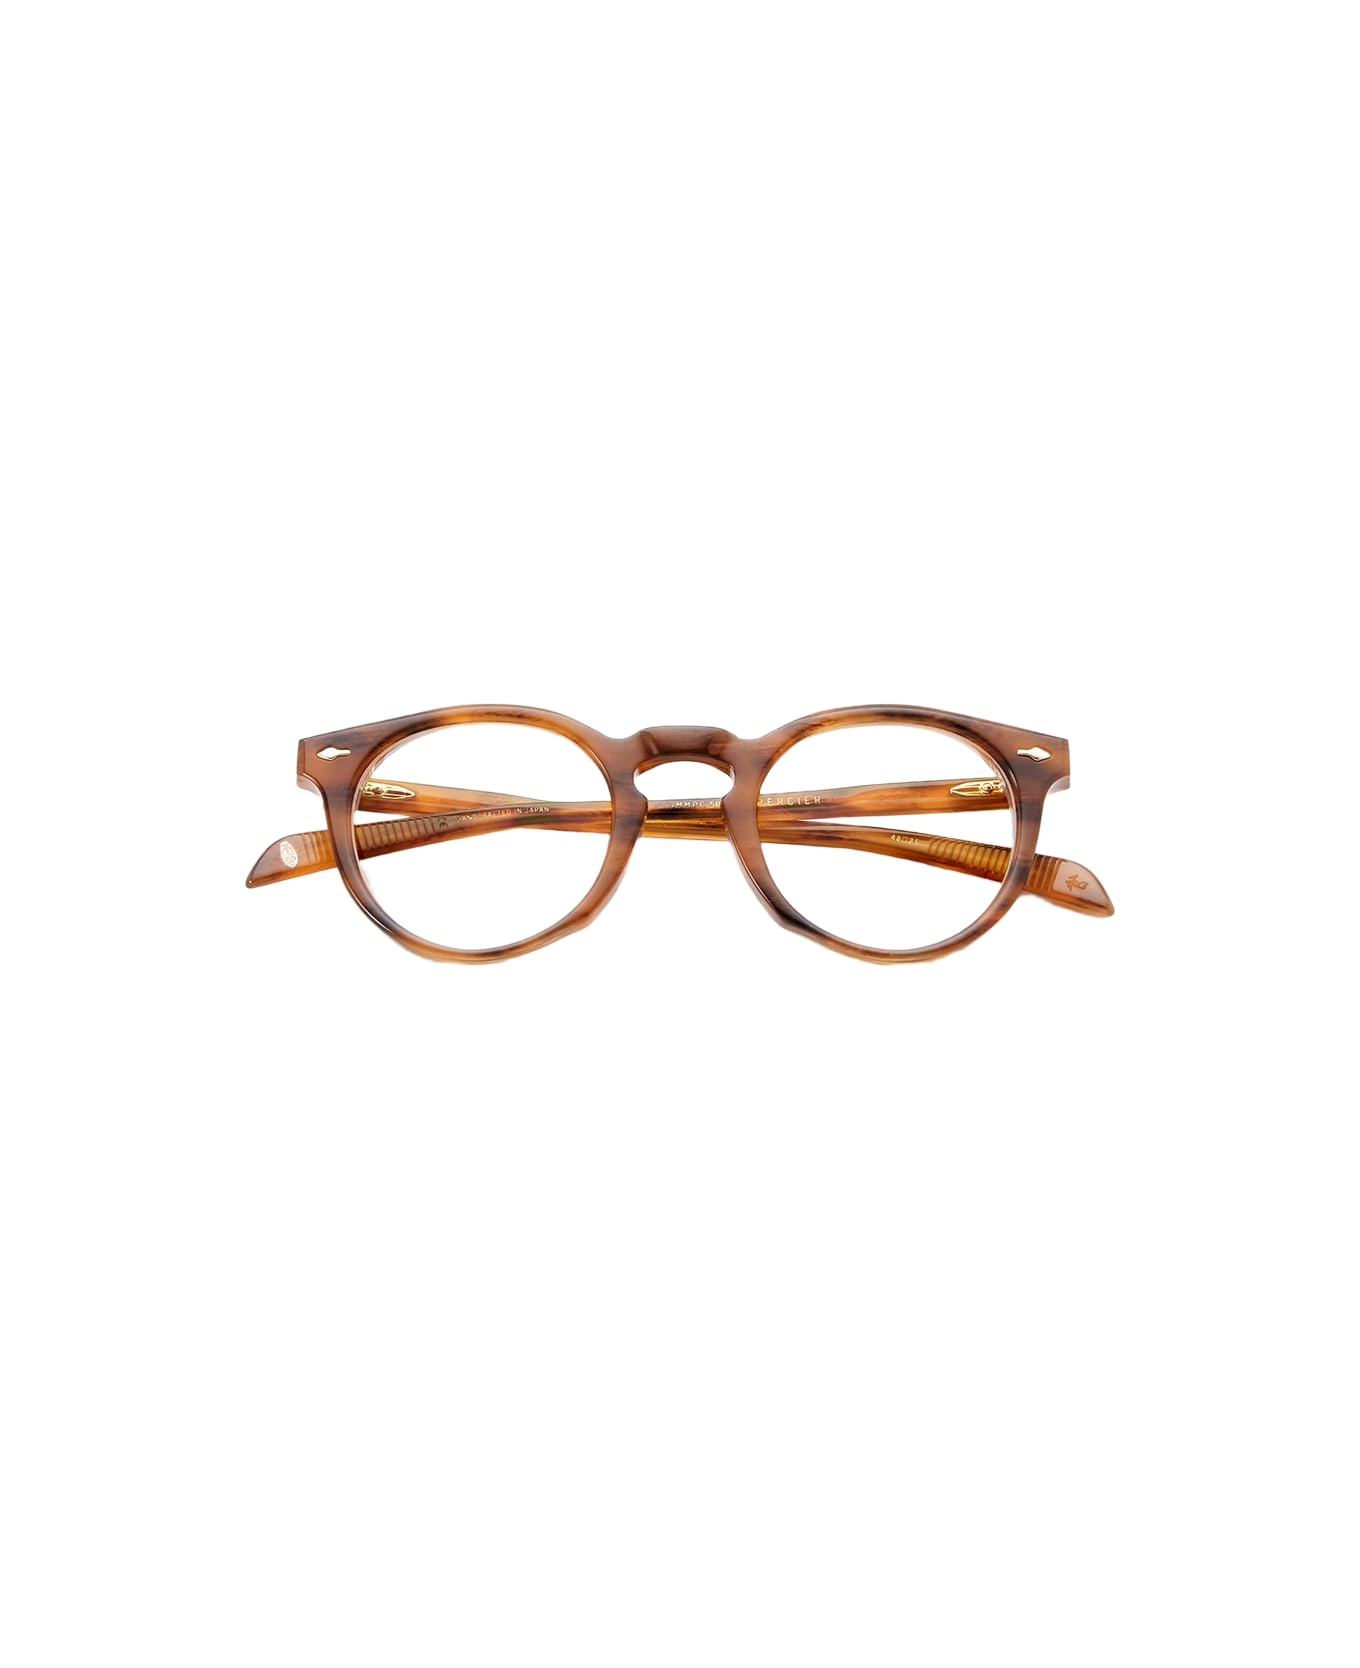 Jacques Marie Mage Percier - Oak Glasses - brown アイウェア